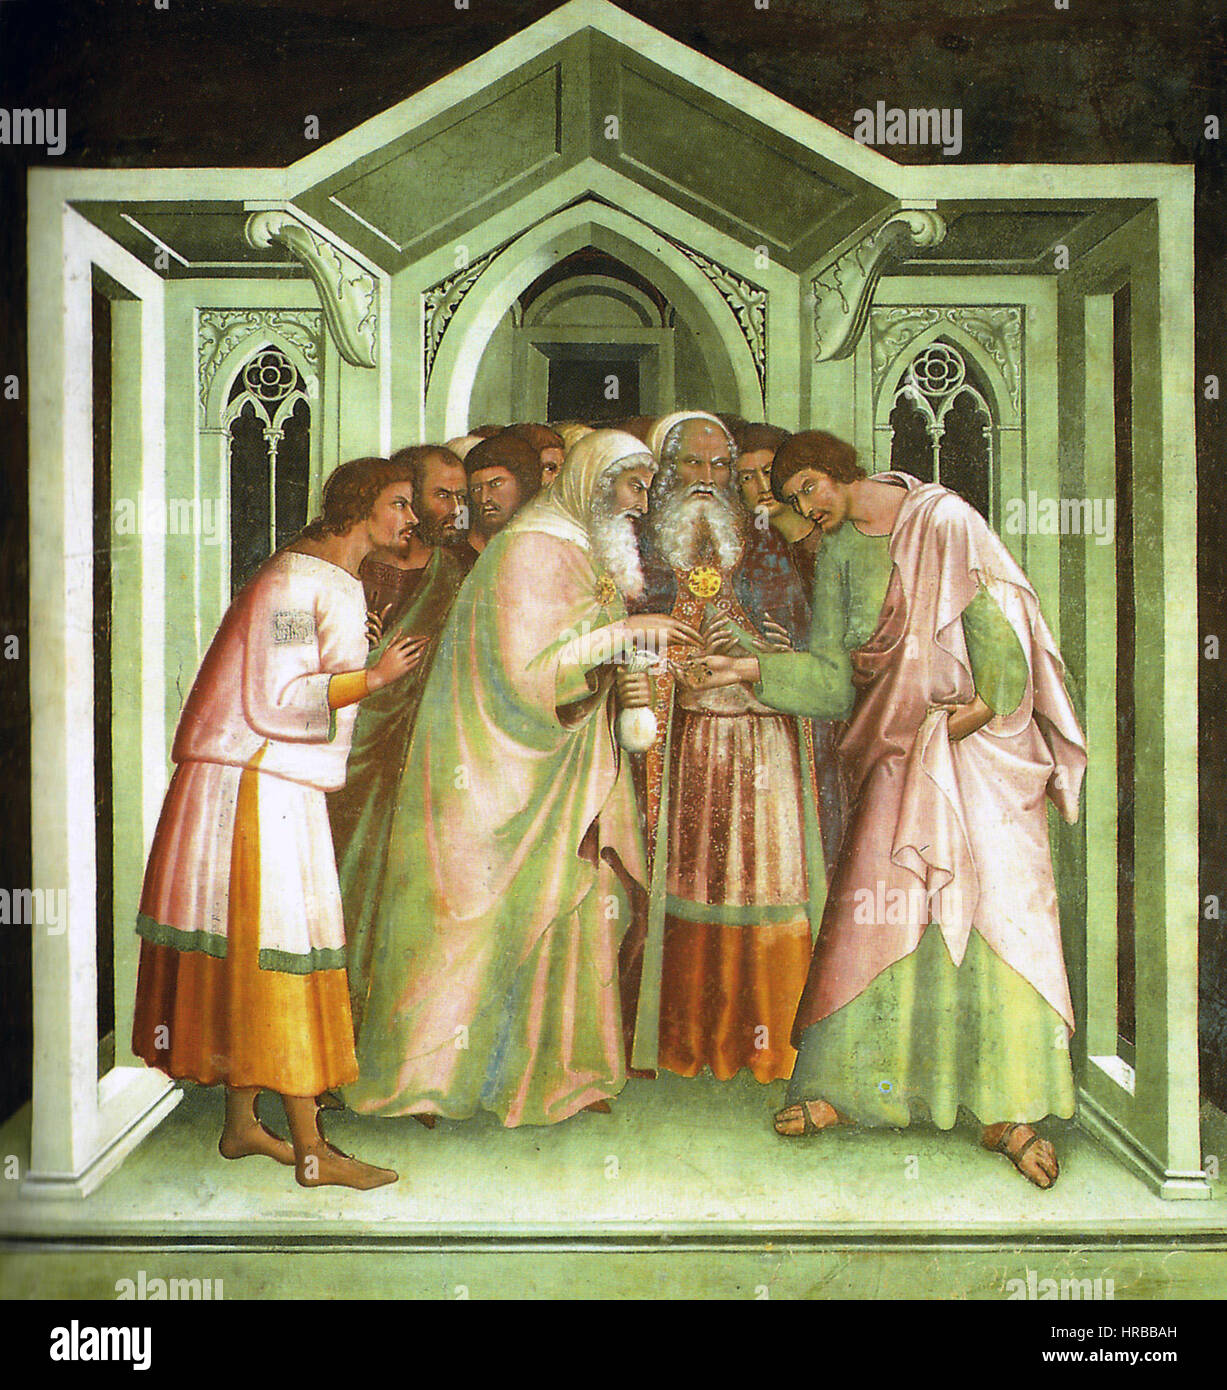 Judas Verrät Jesus Fotos Und Bildmaterial In Hoher Auflösung Alamy